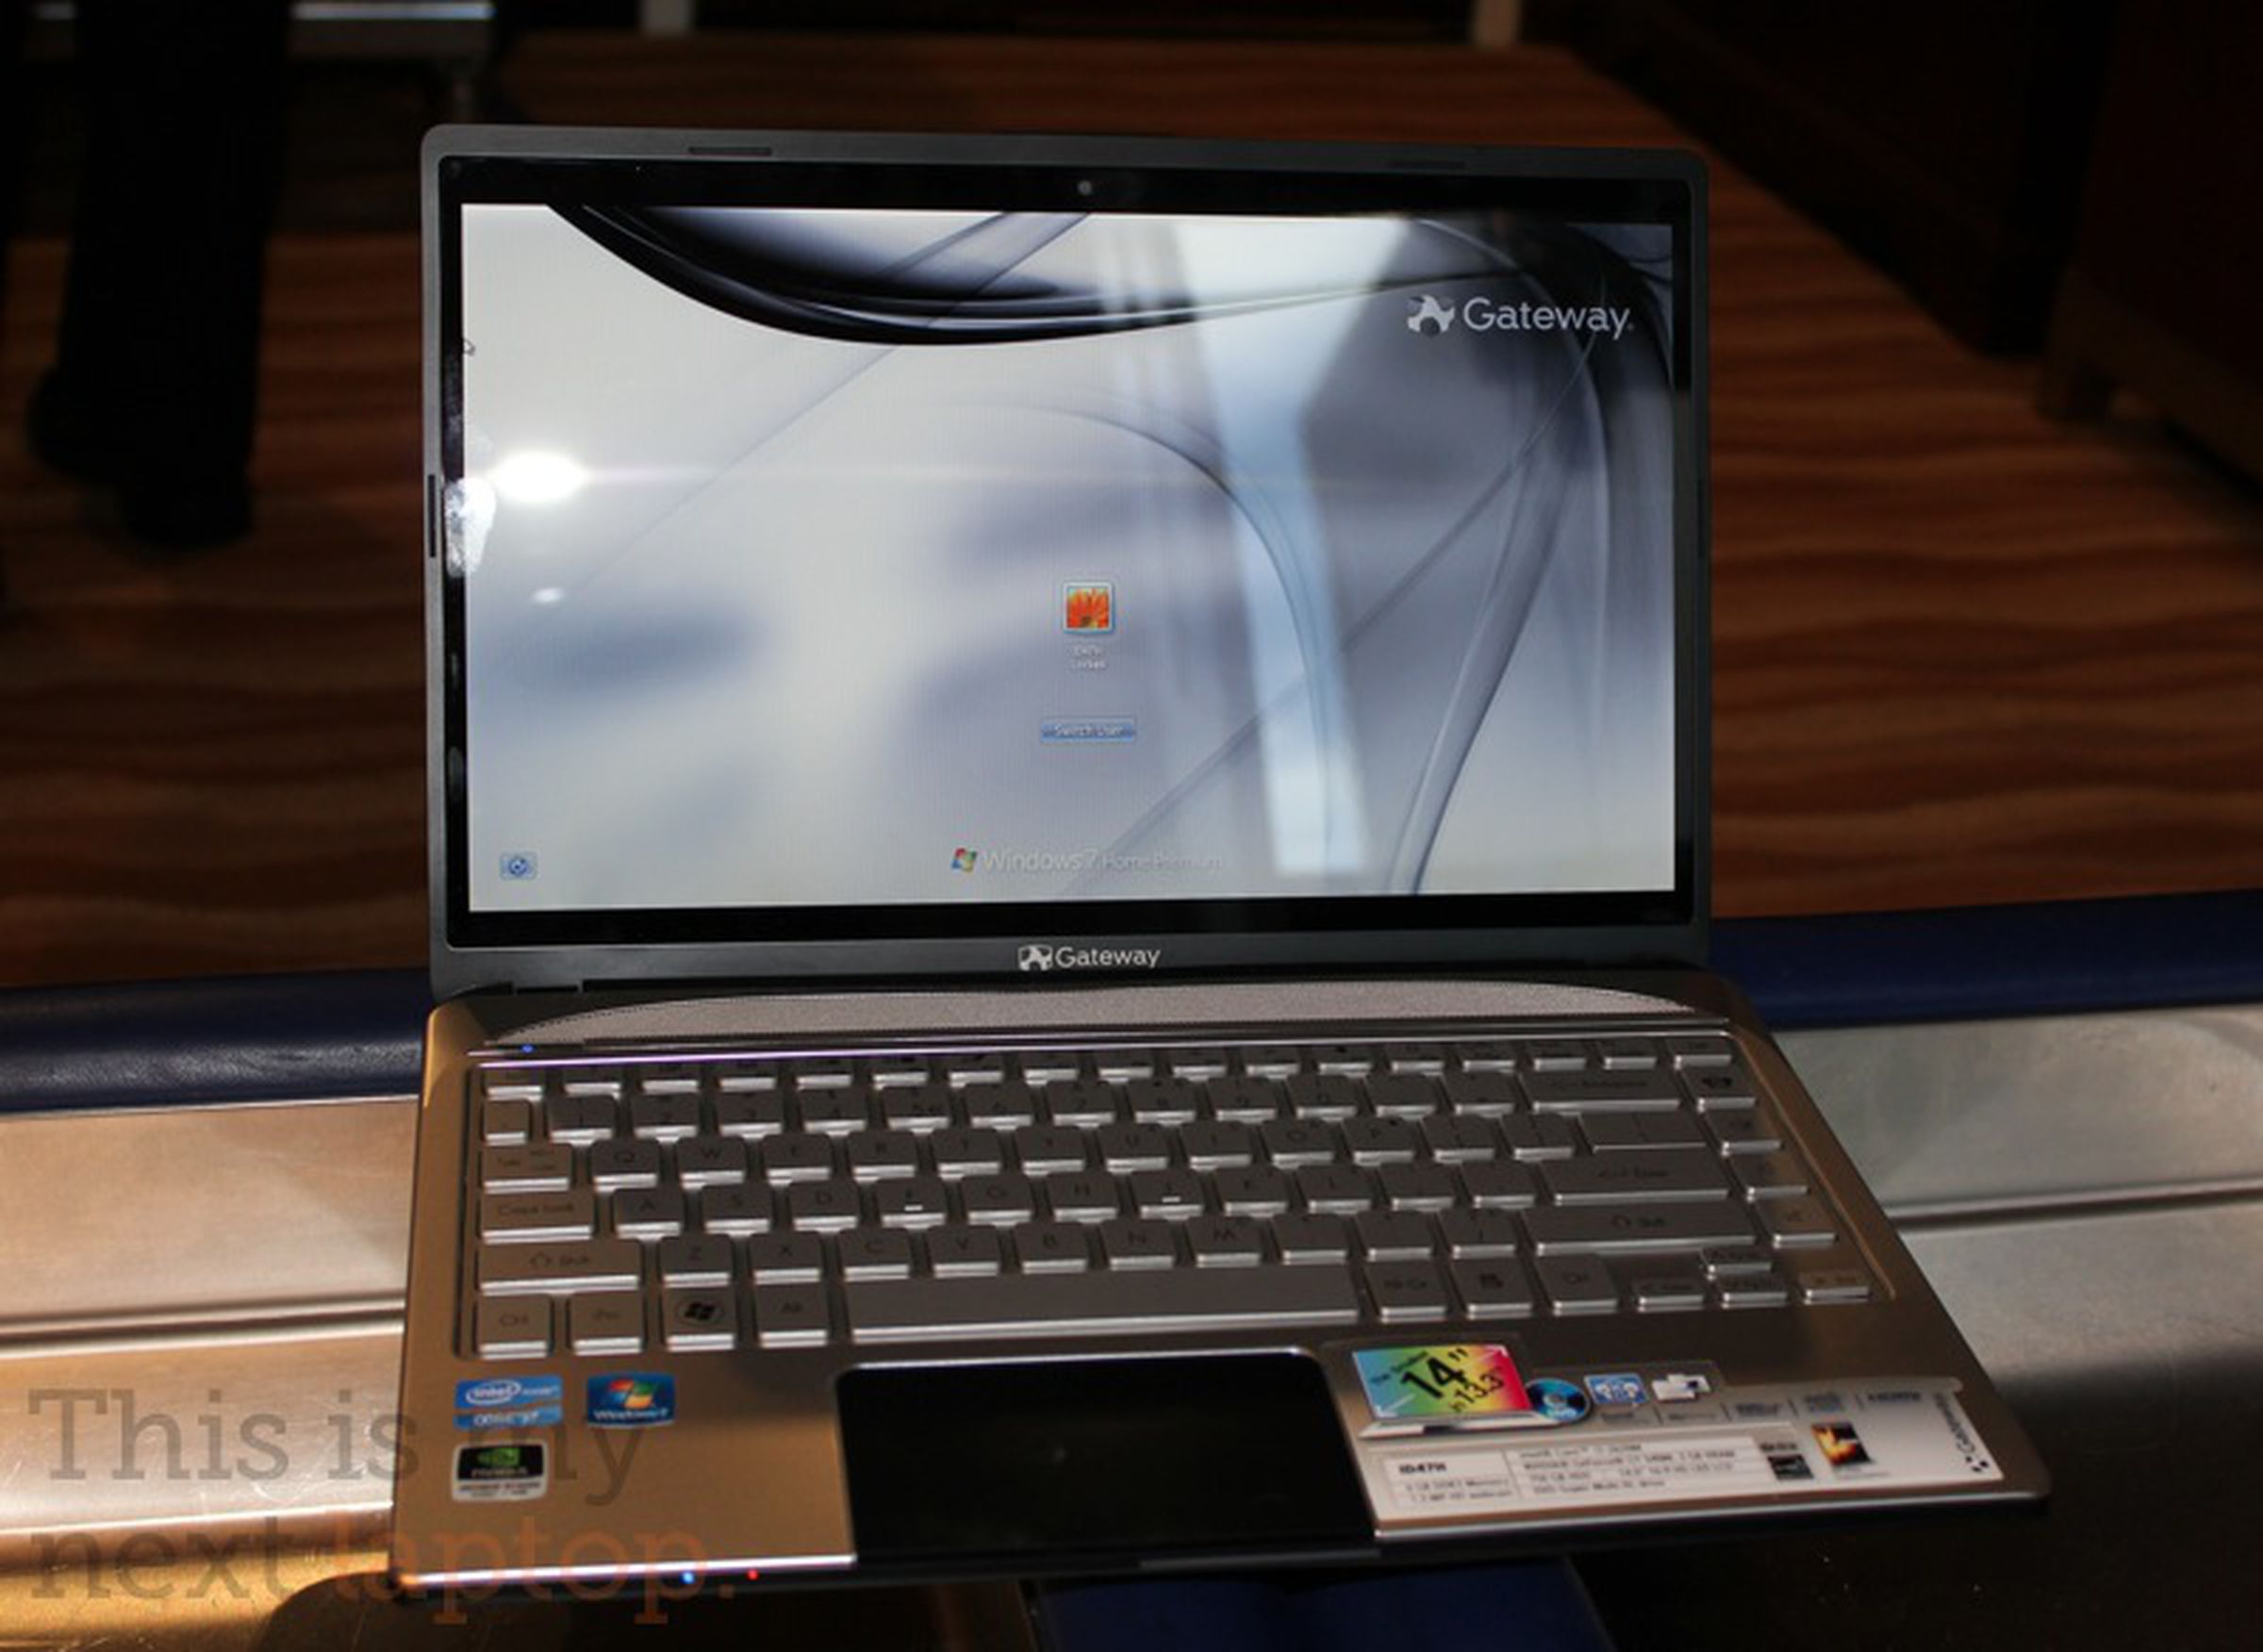 Gateway ID47 Series laptop hands-on photos